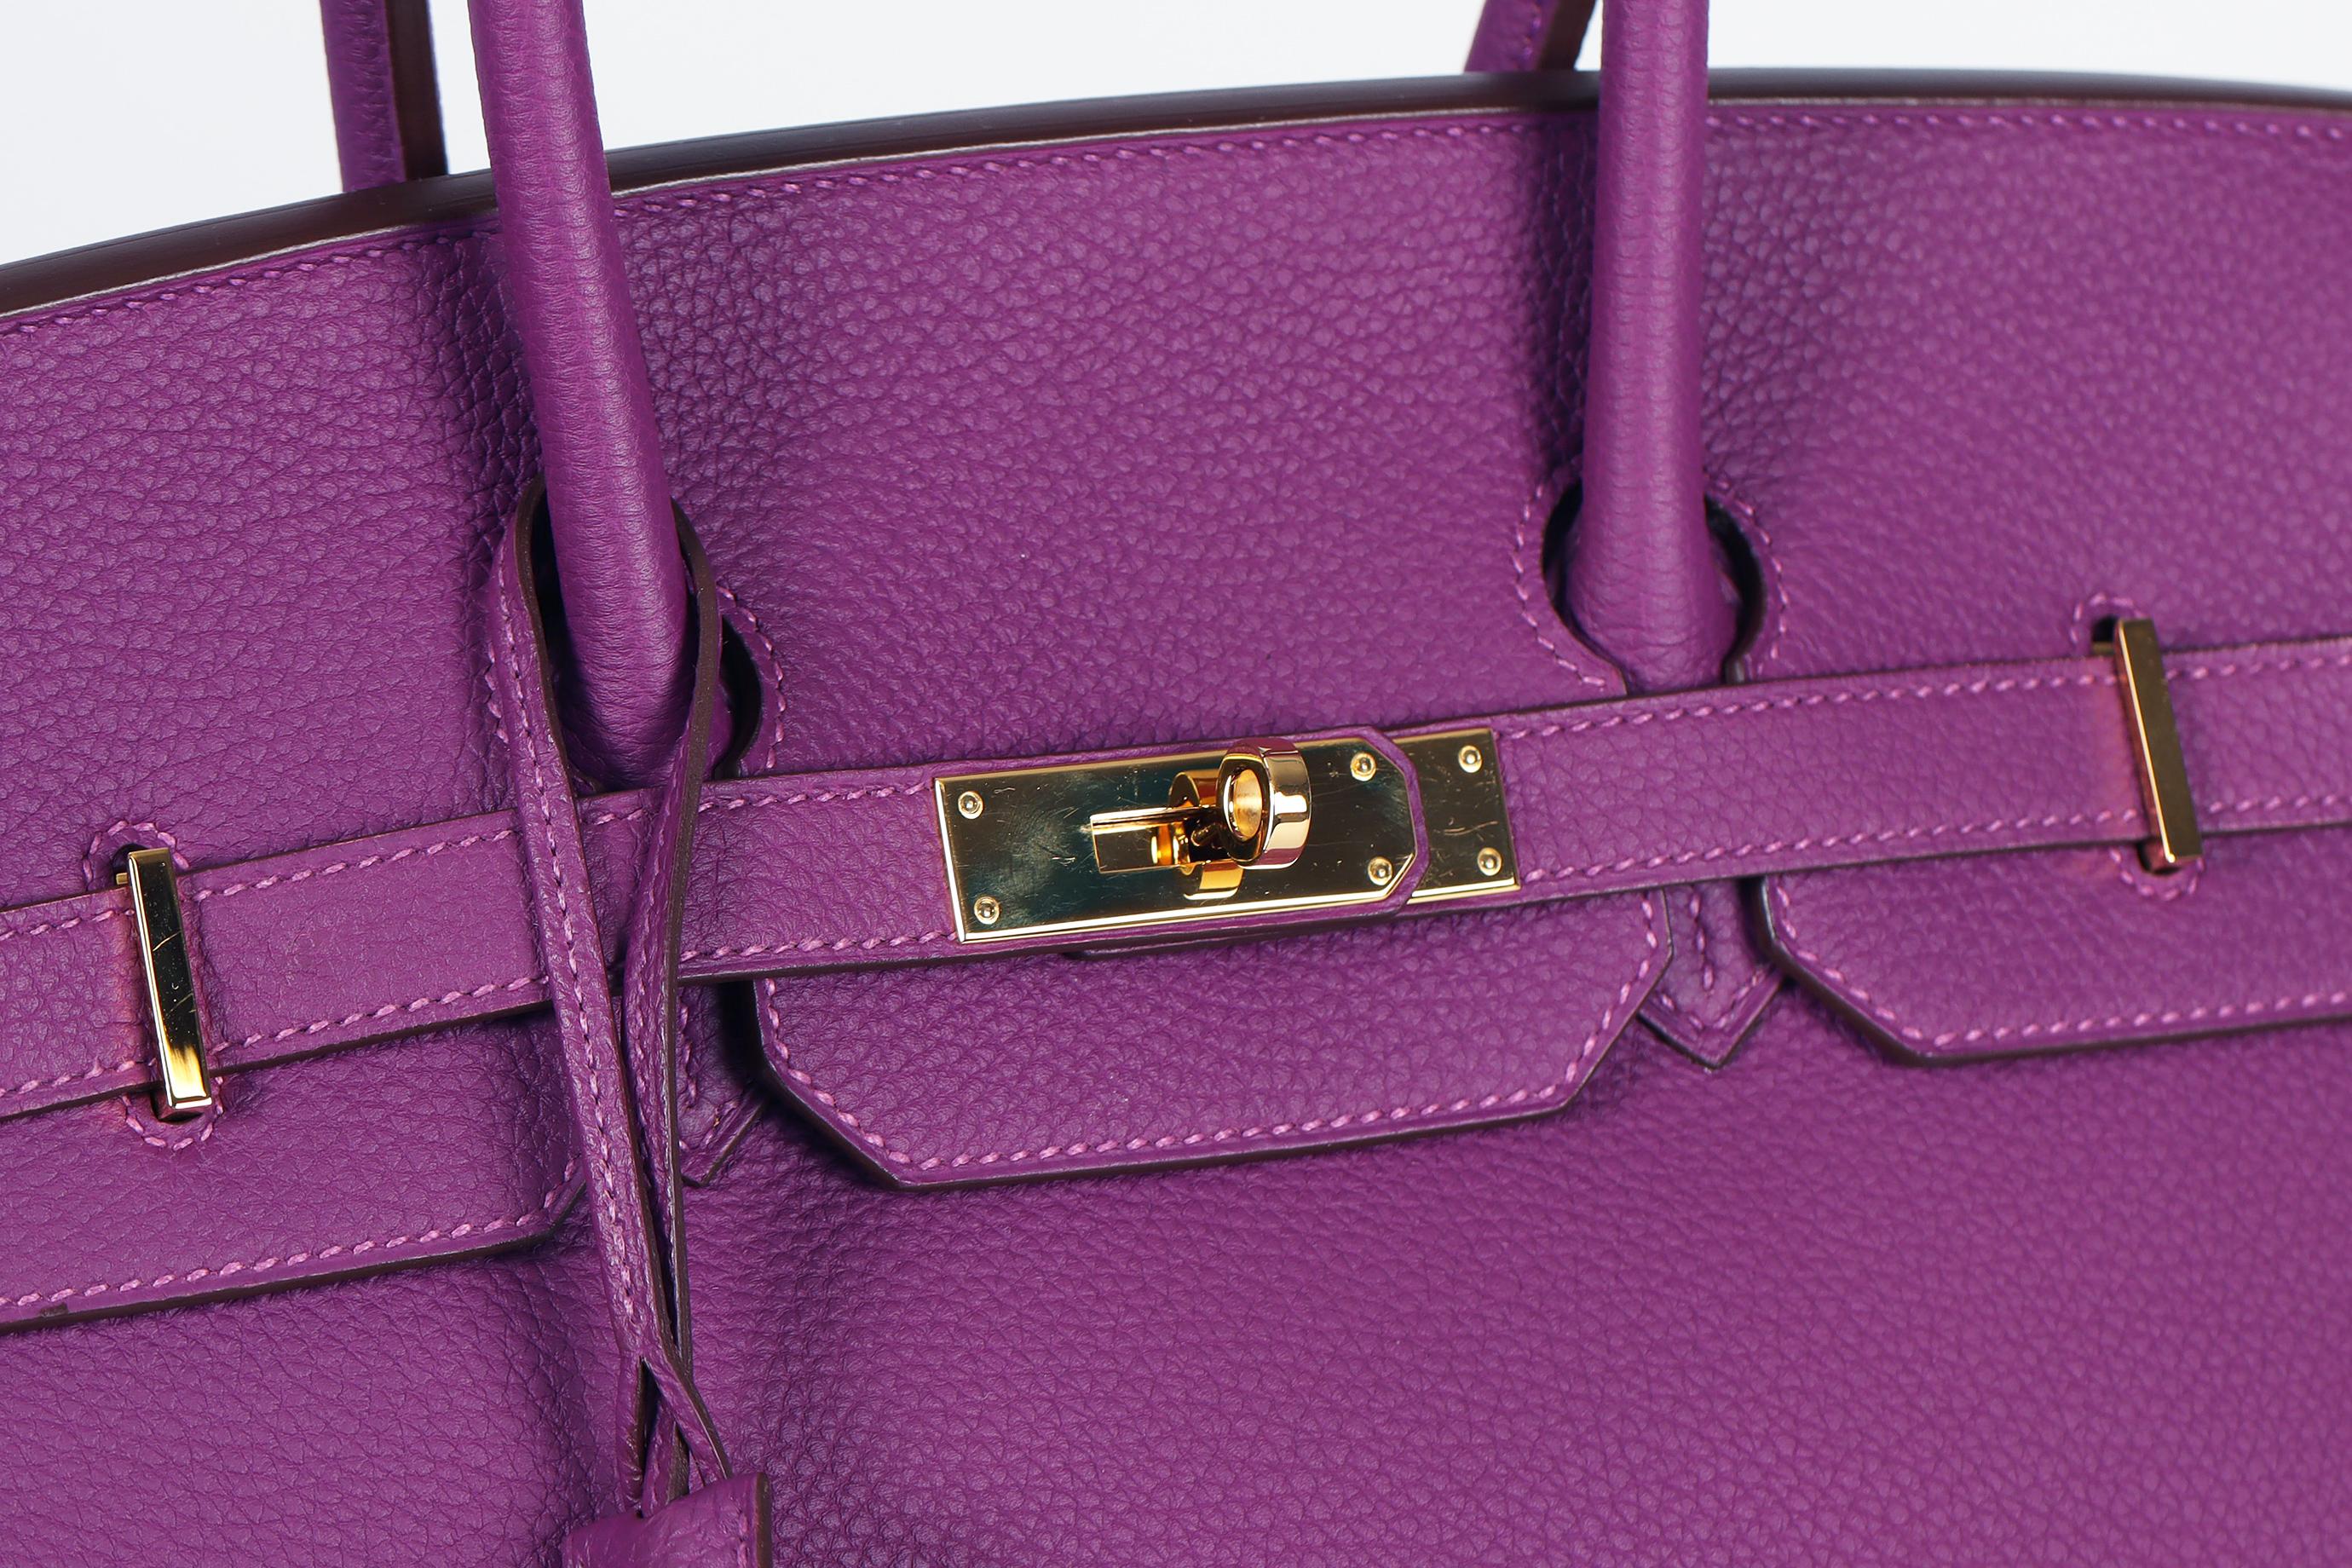 Hermès 2014 Birkin 35cm Togo Leather Bag For Sale 4